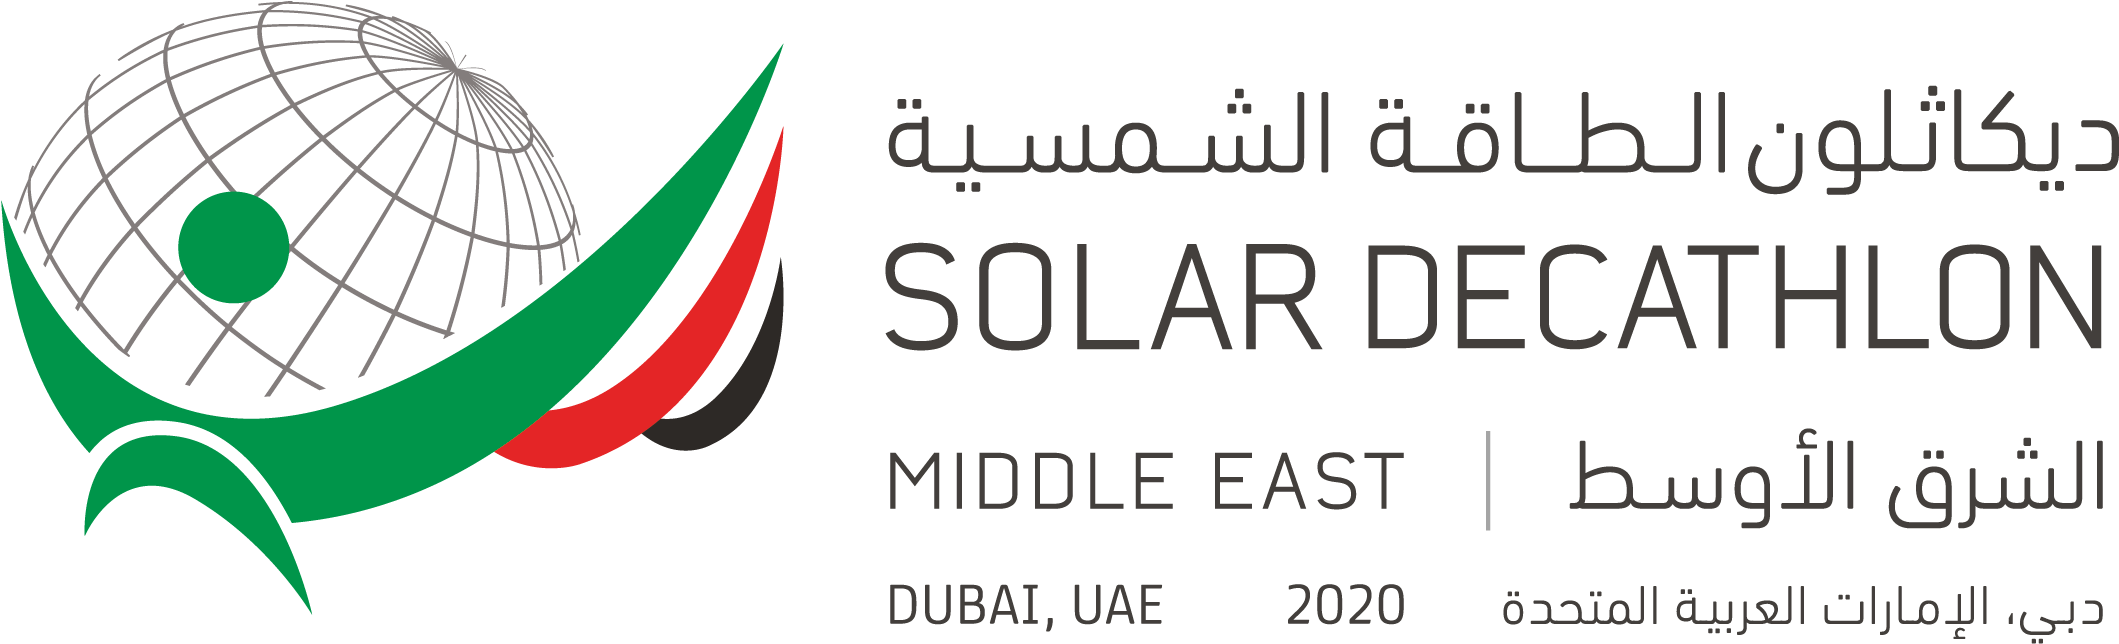 Solar Decathlon Middle East2020 Logo PNG